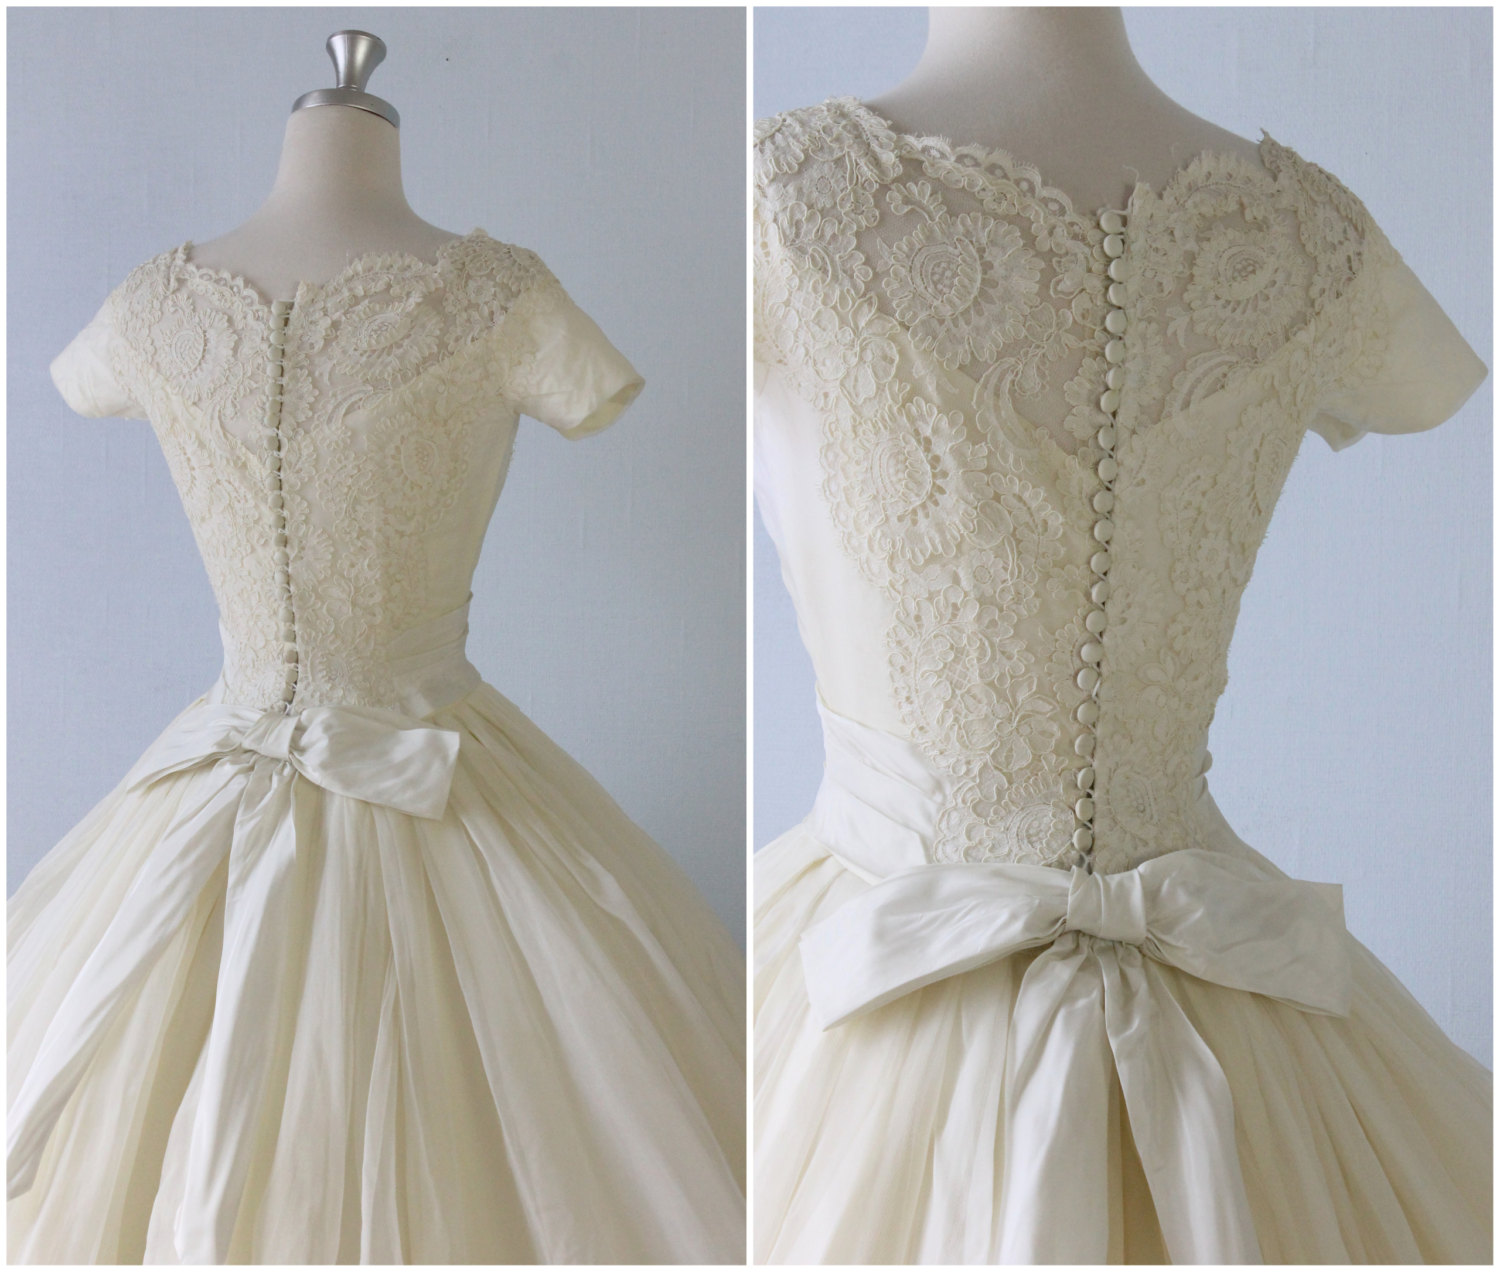 Vintage Wedding Dress from The Vintage Mistress - 1950s Ballgown